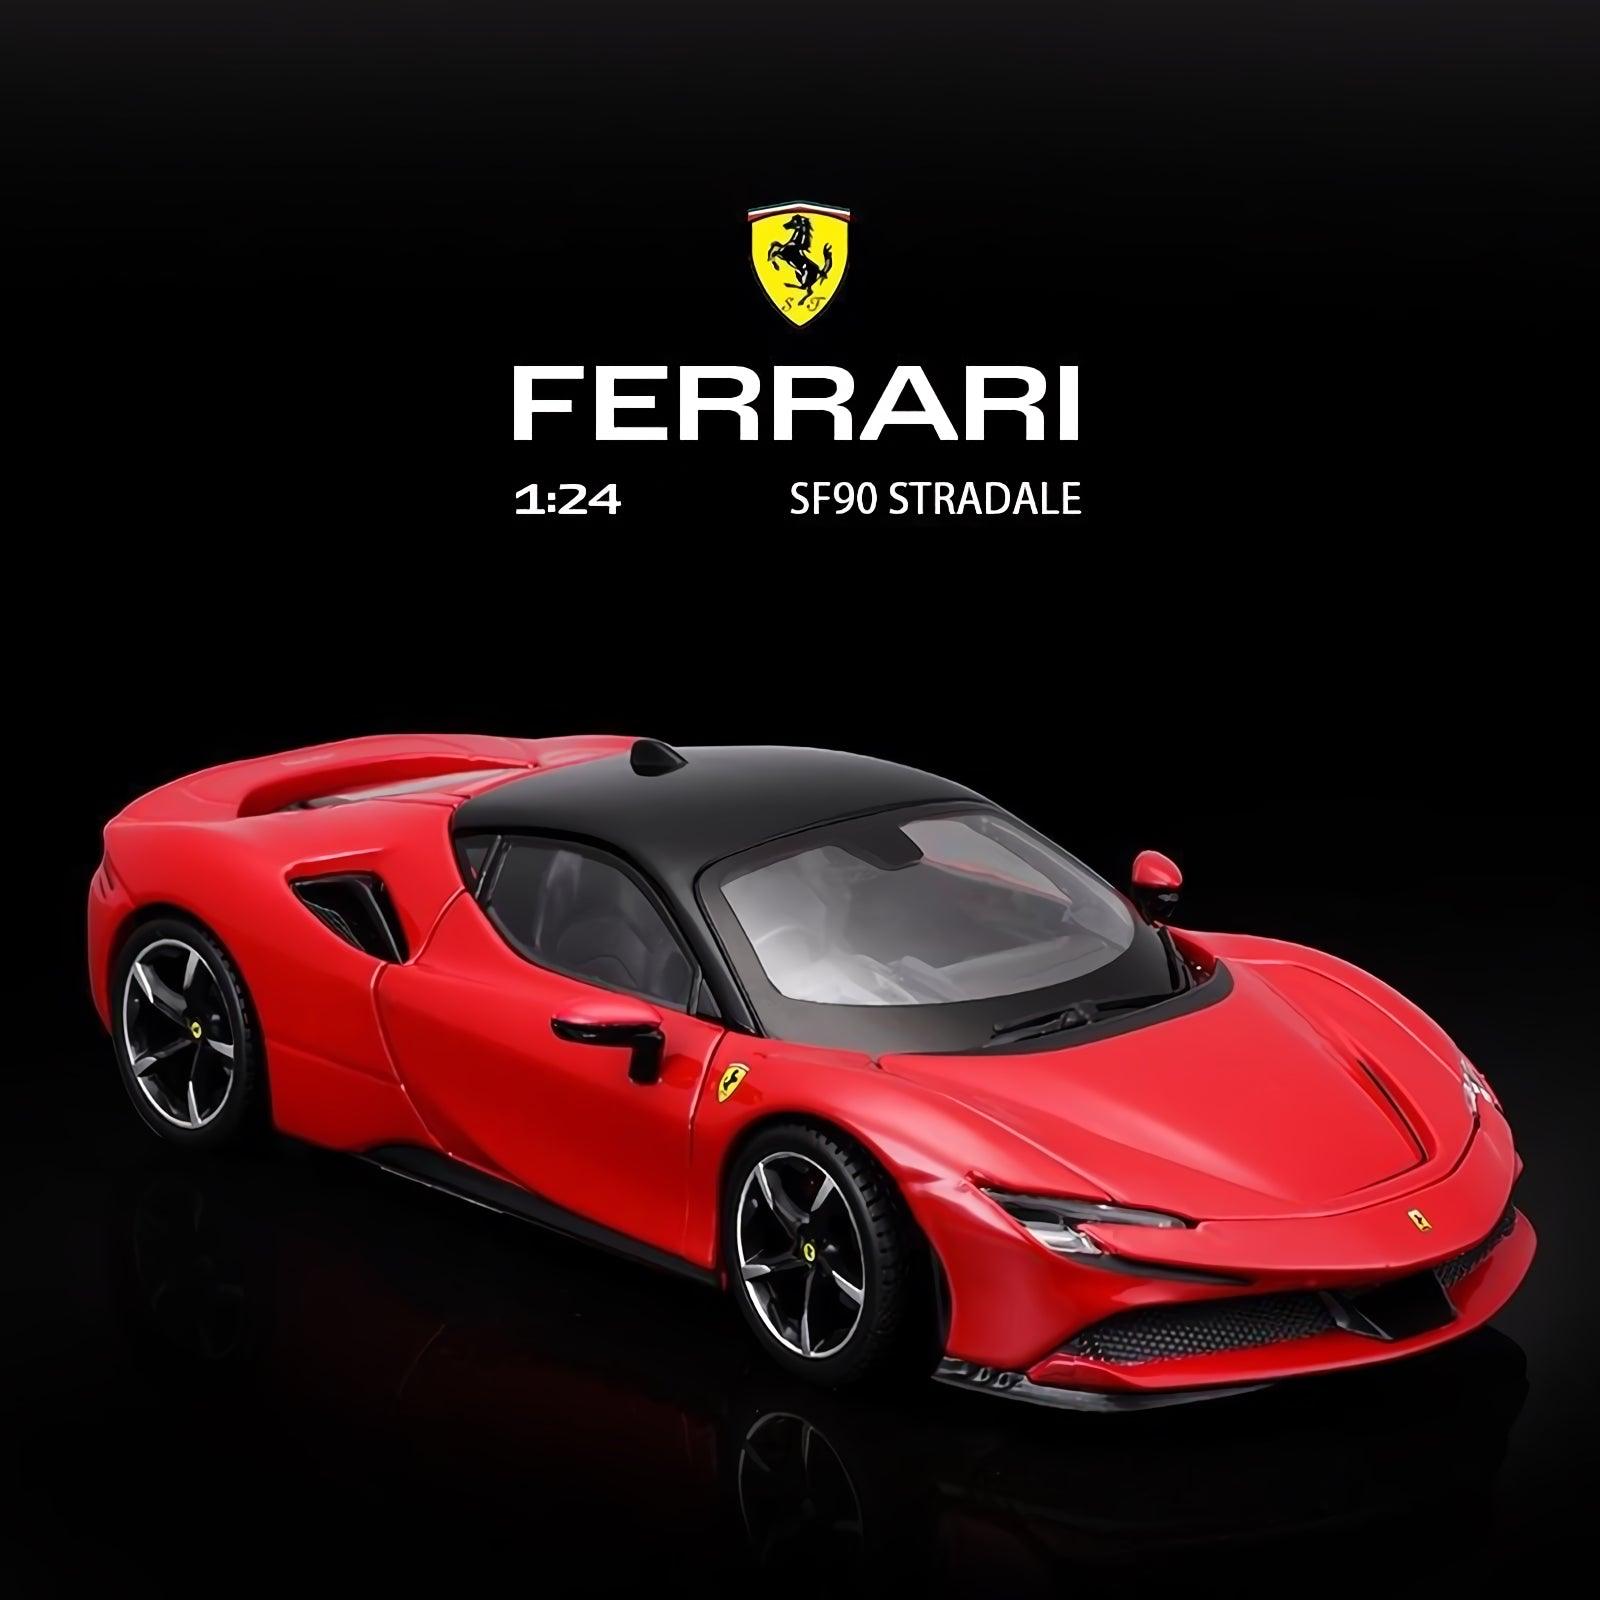 1:24 Scale Die-Cast Alloy Model Car Ferrari SF90 Genuine authorization - PANSEKtoy